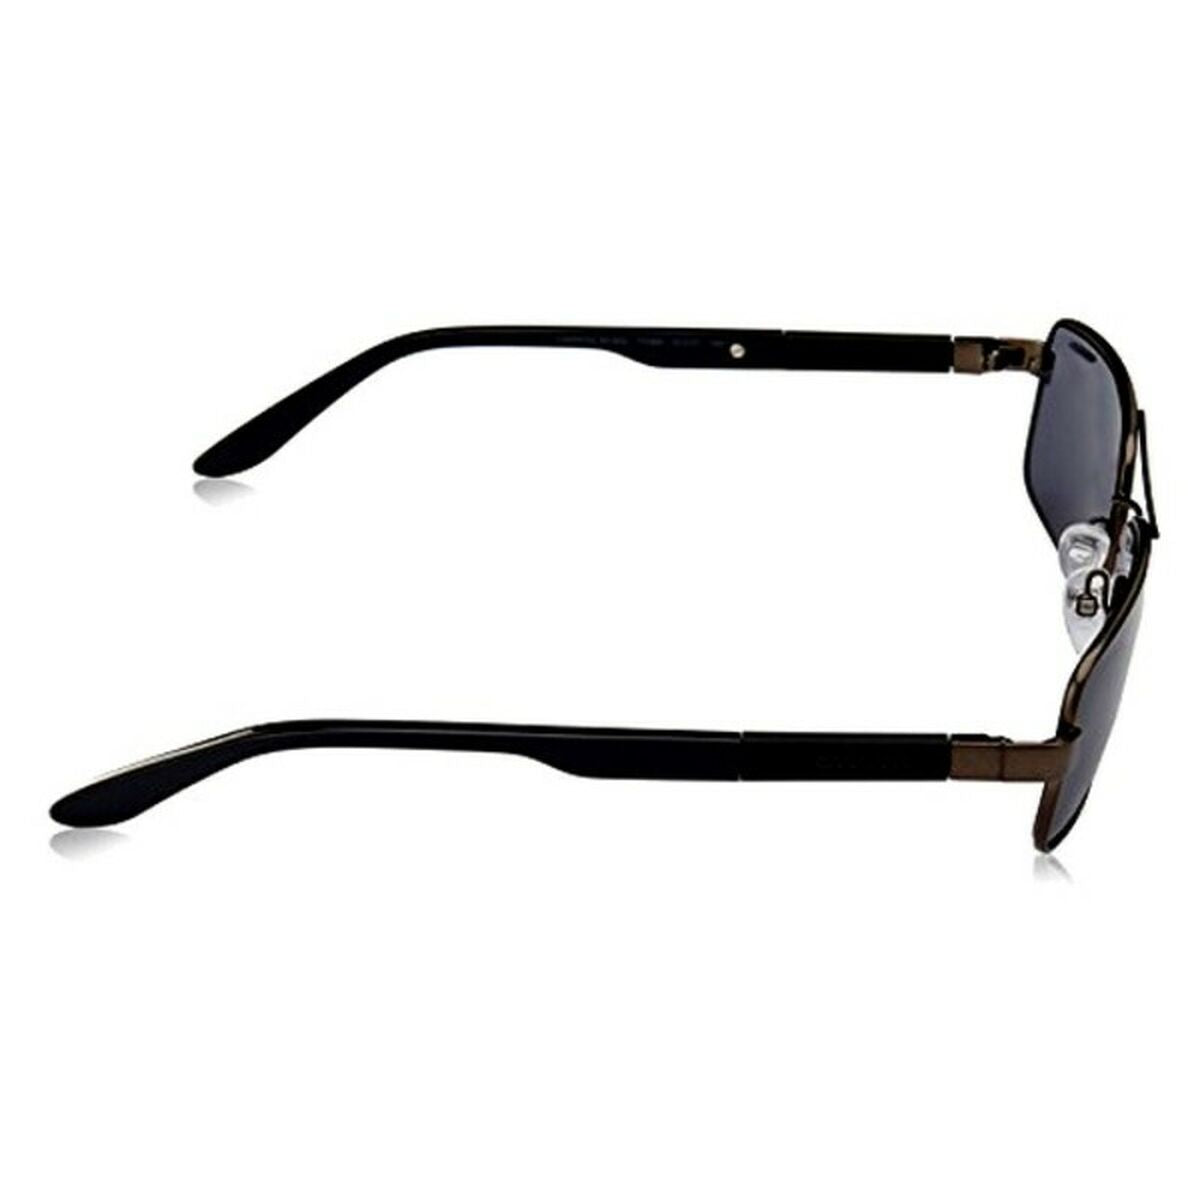 Men's Sunglasses Carrera 8018-S-TVI-BN